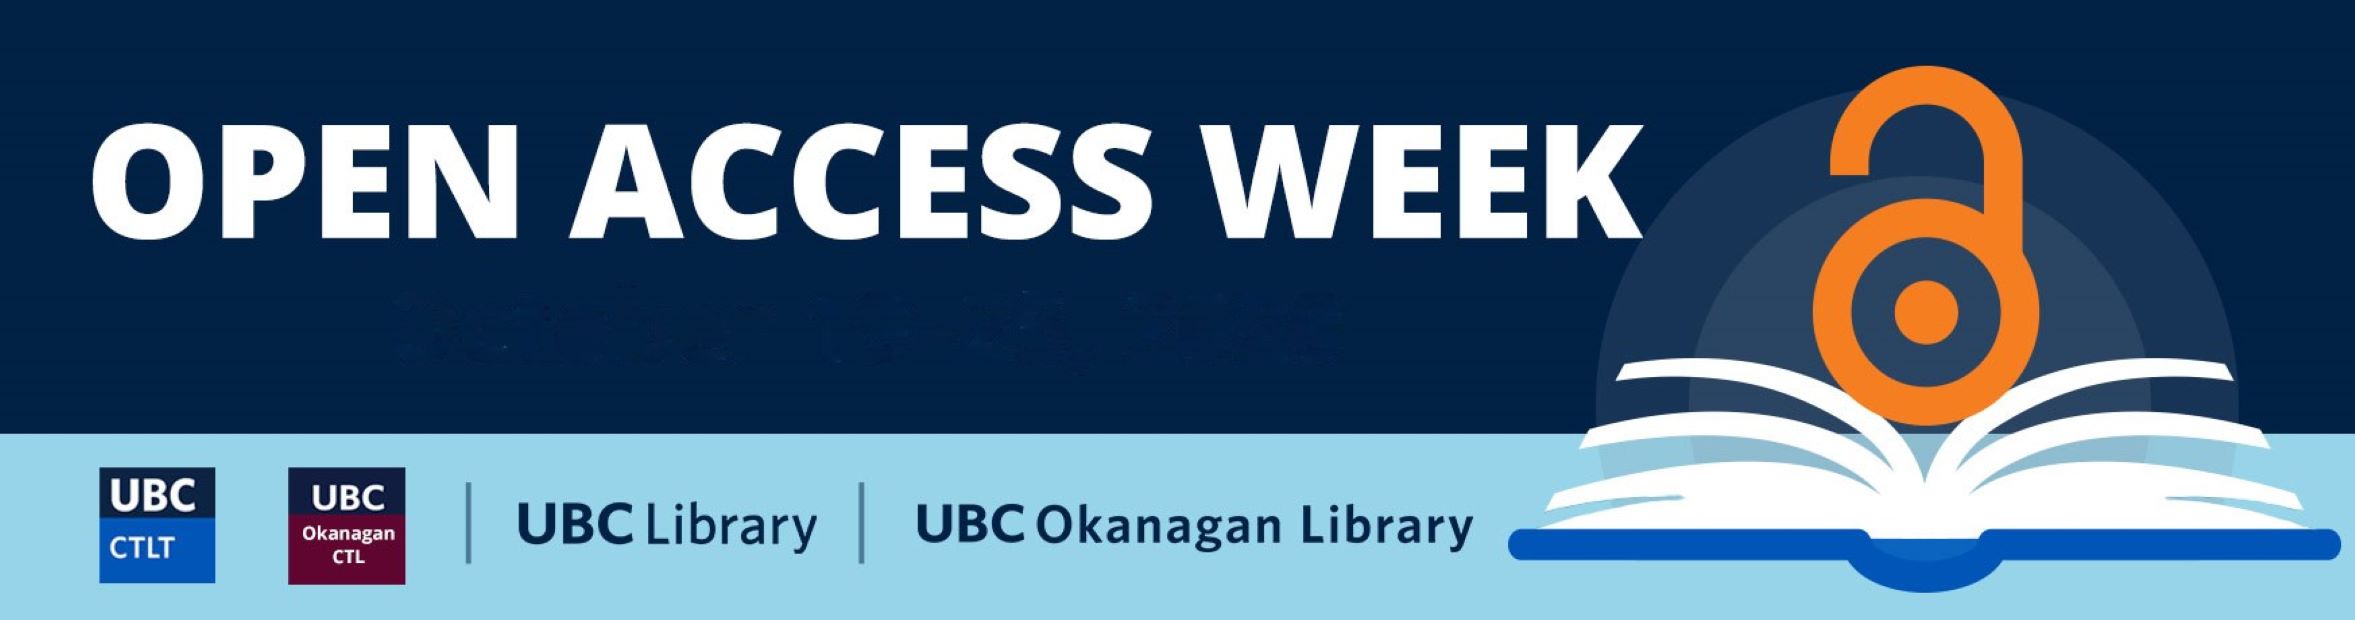 Open Access Week at UBC logo